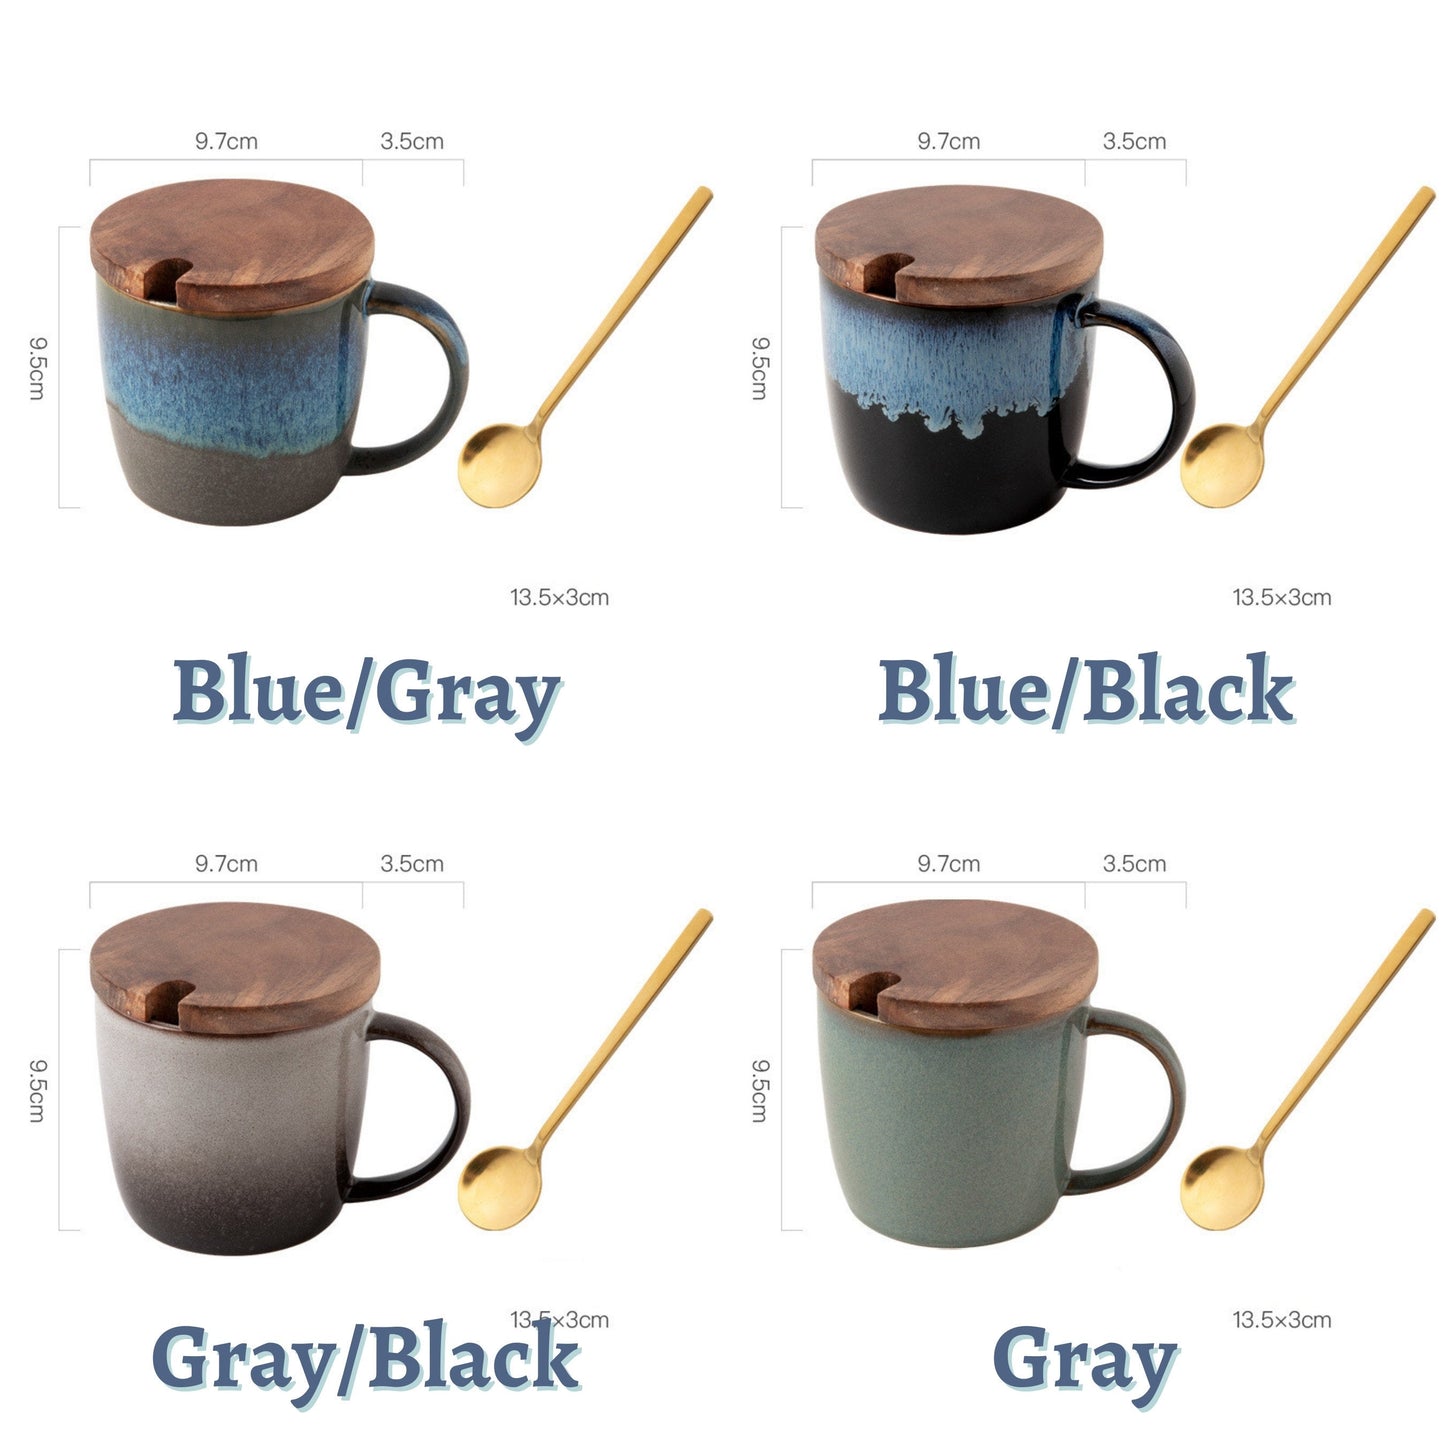 Reactive Glazed Mug 13.5oz | Latte Mug, Colorful Mug Set, Ceramics Modern Mug, Japanese Pottery Mug